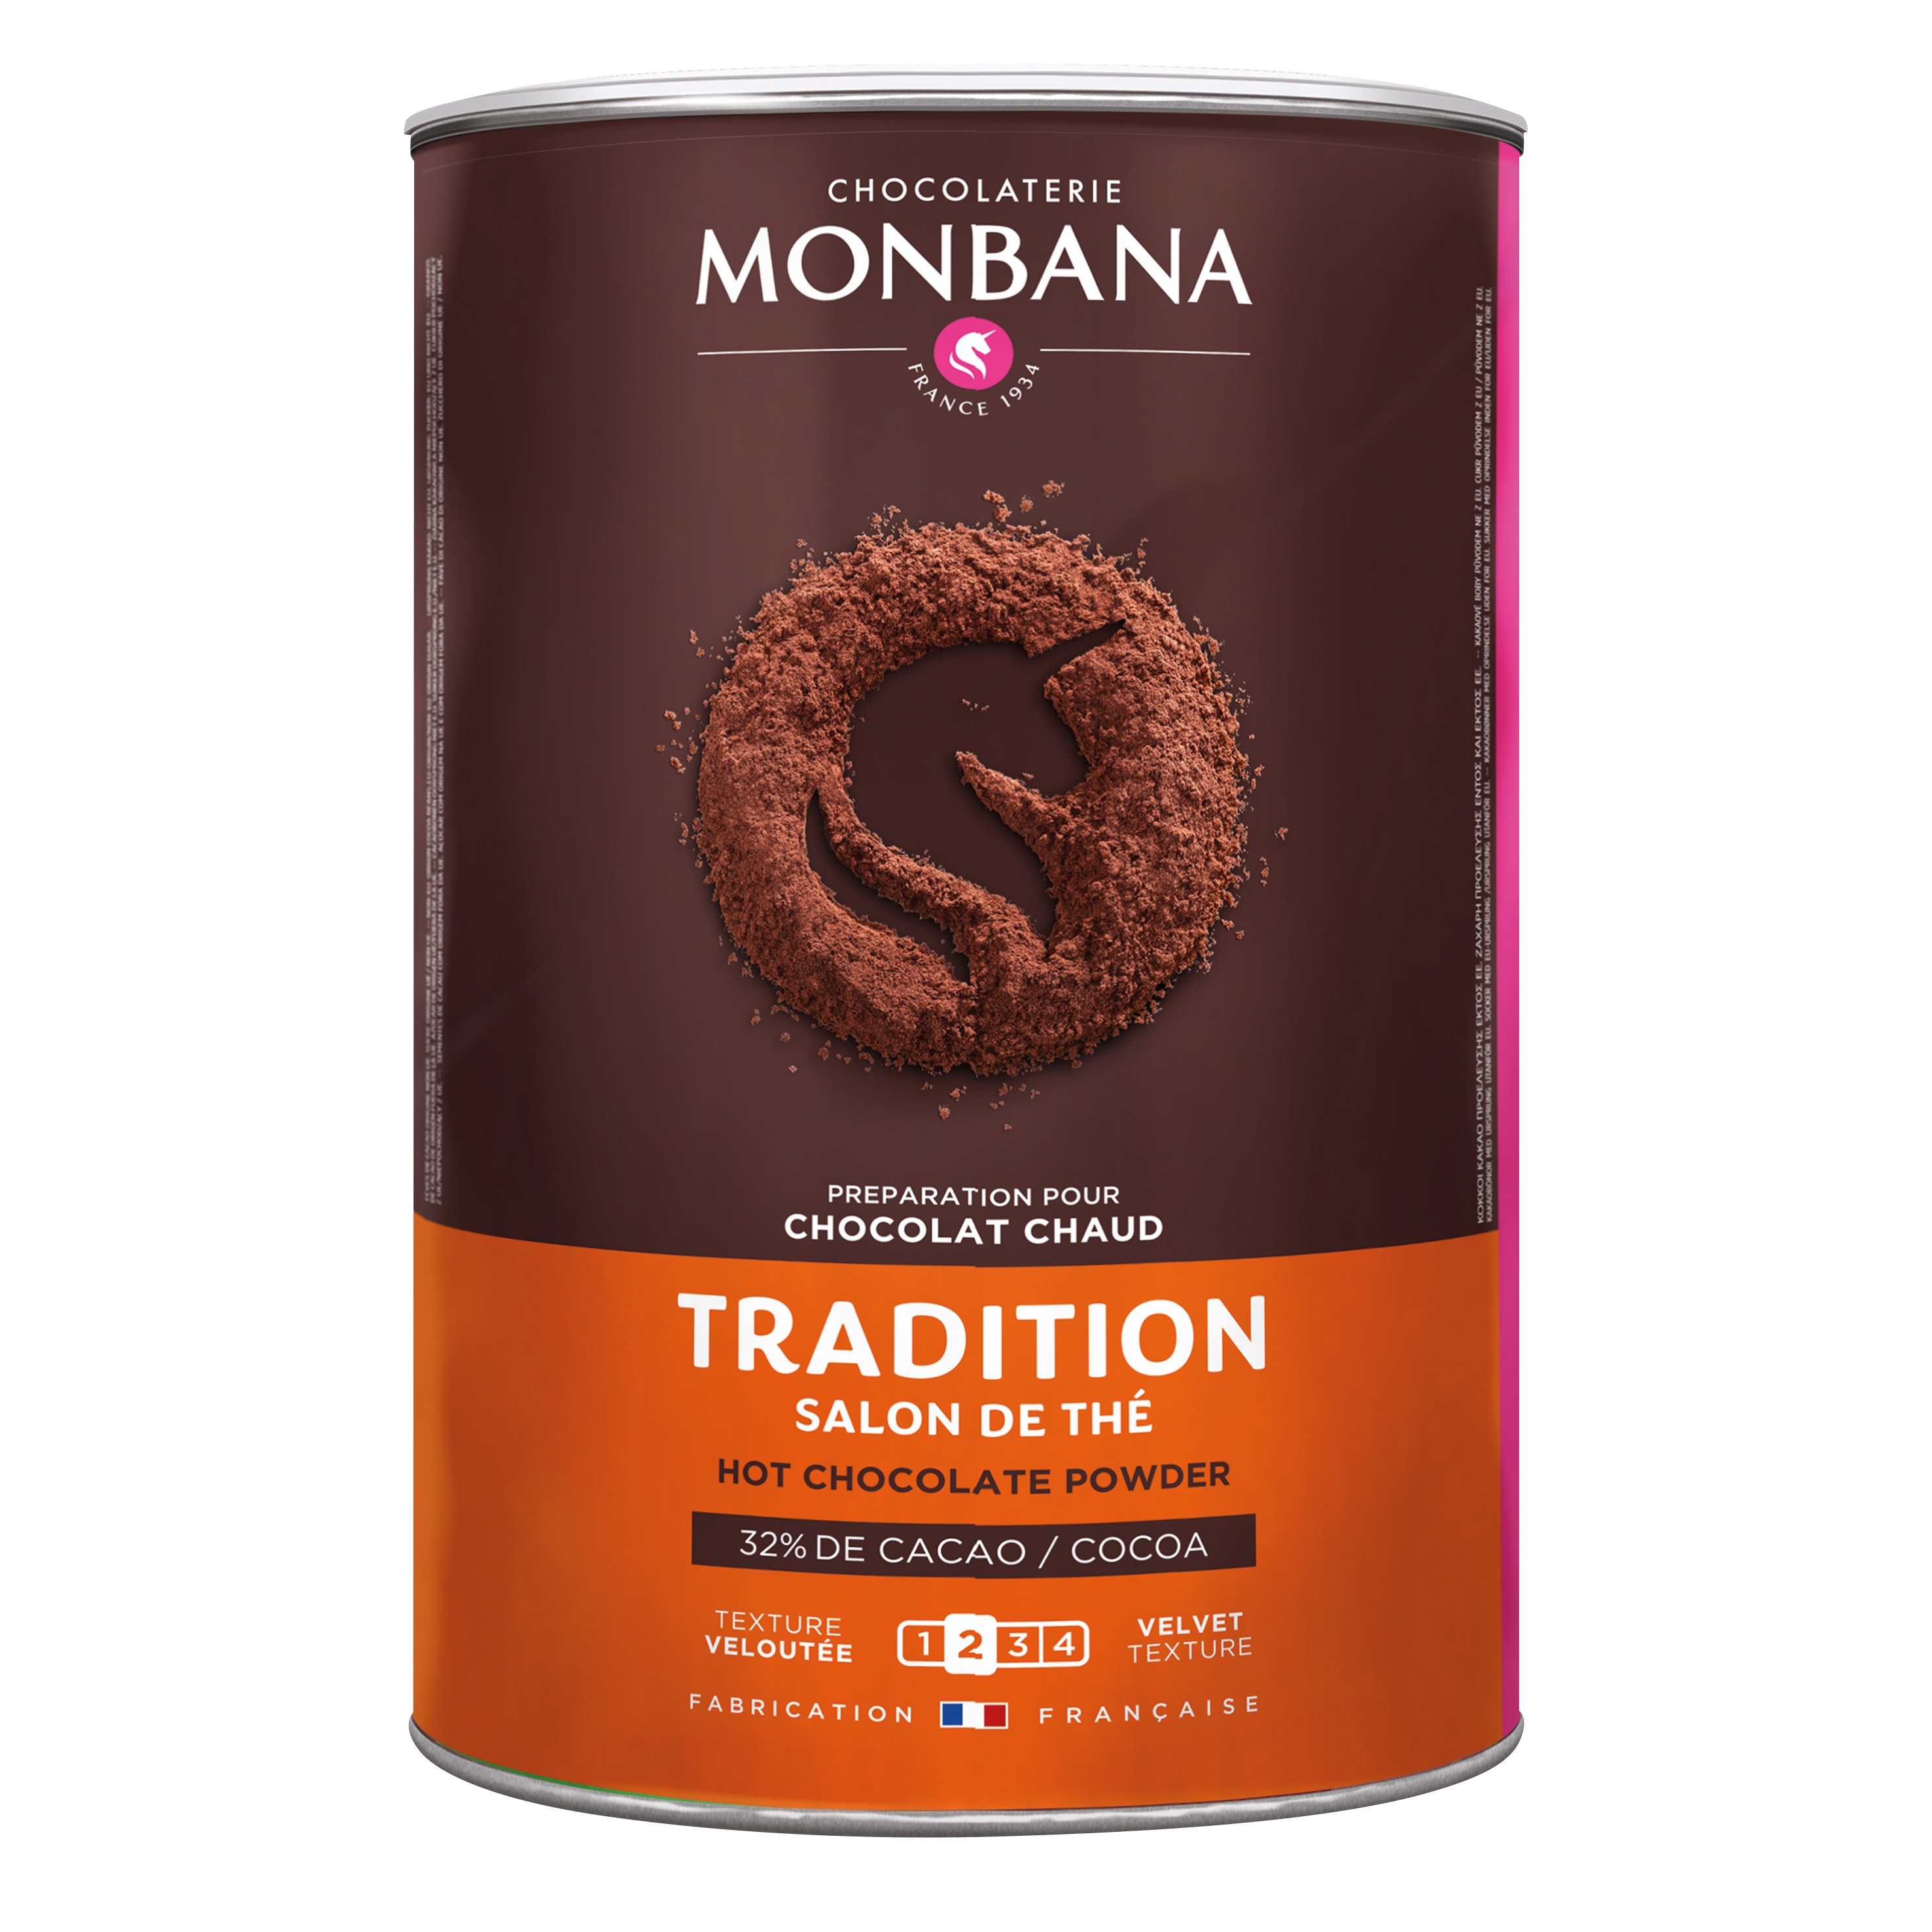 »Tradition« Chocolate Powder